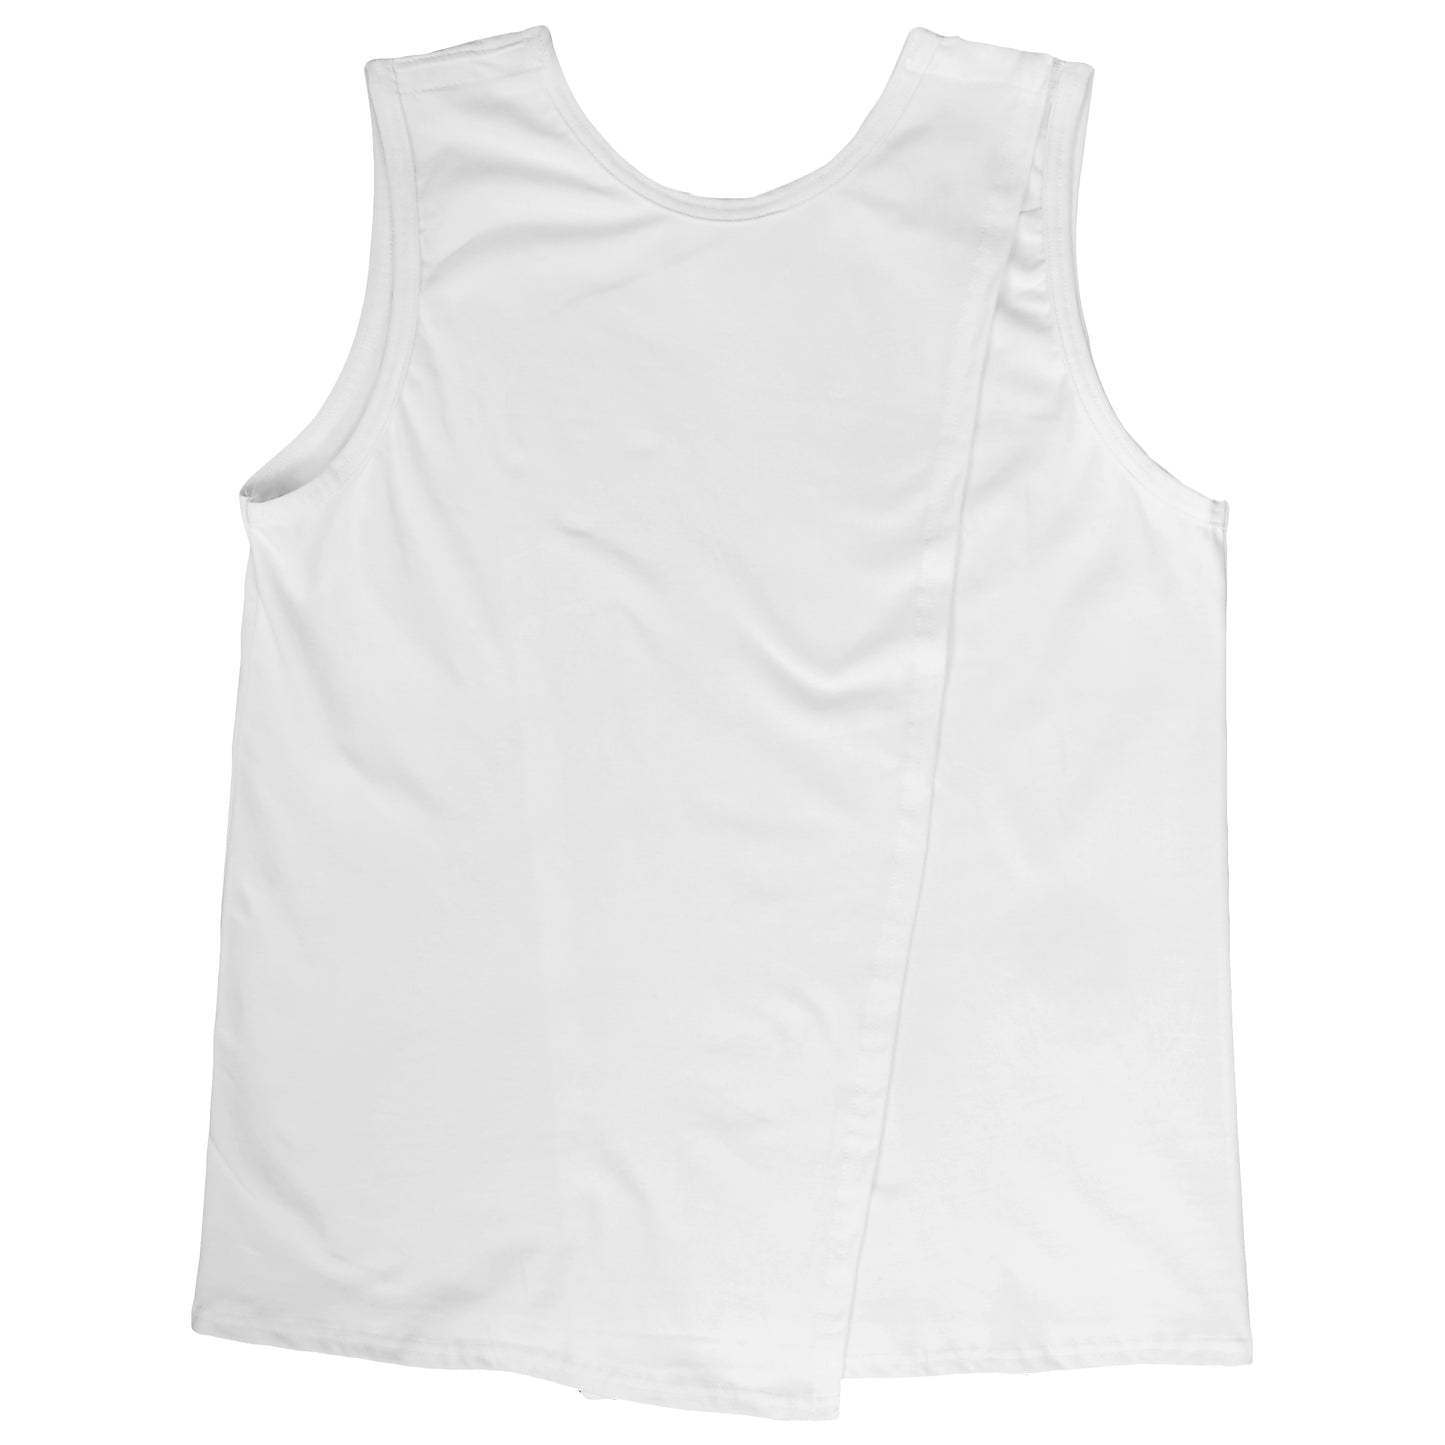 Adaptive Open Back Cotton Undershirt